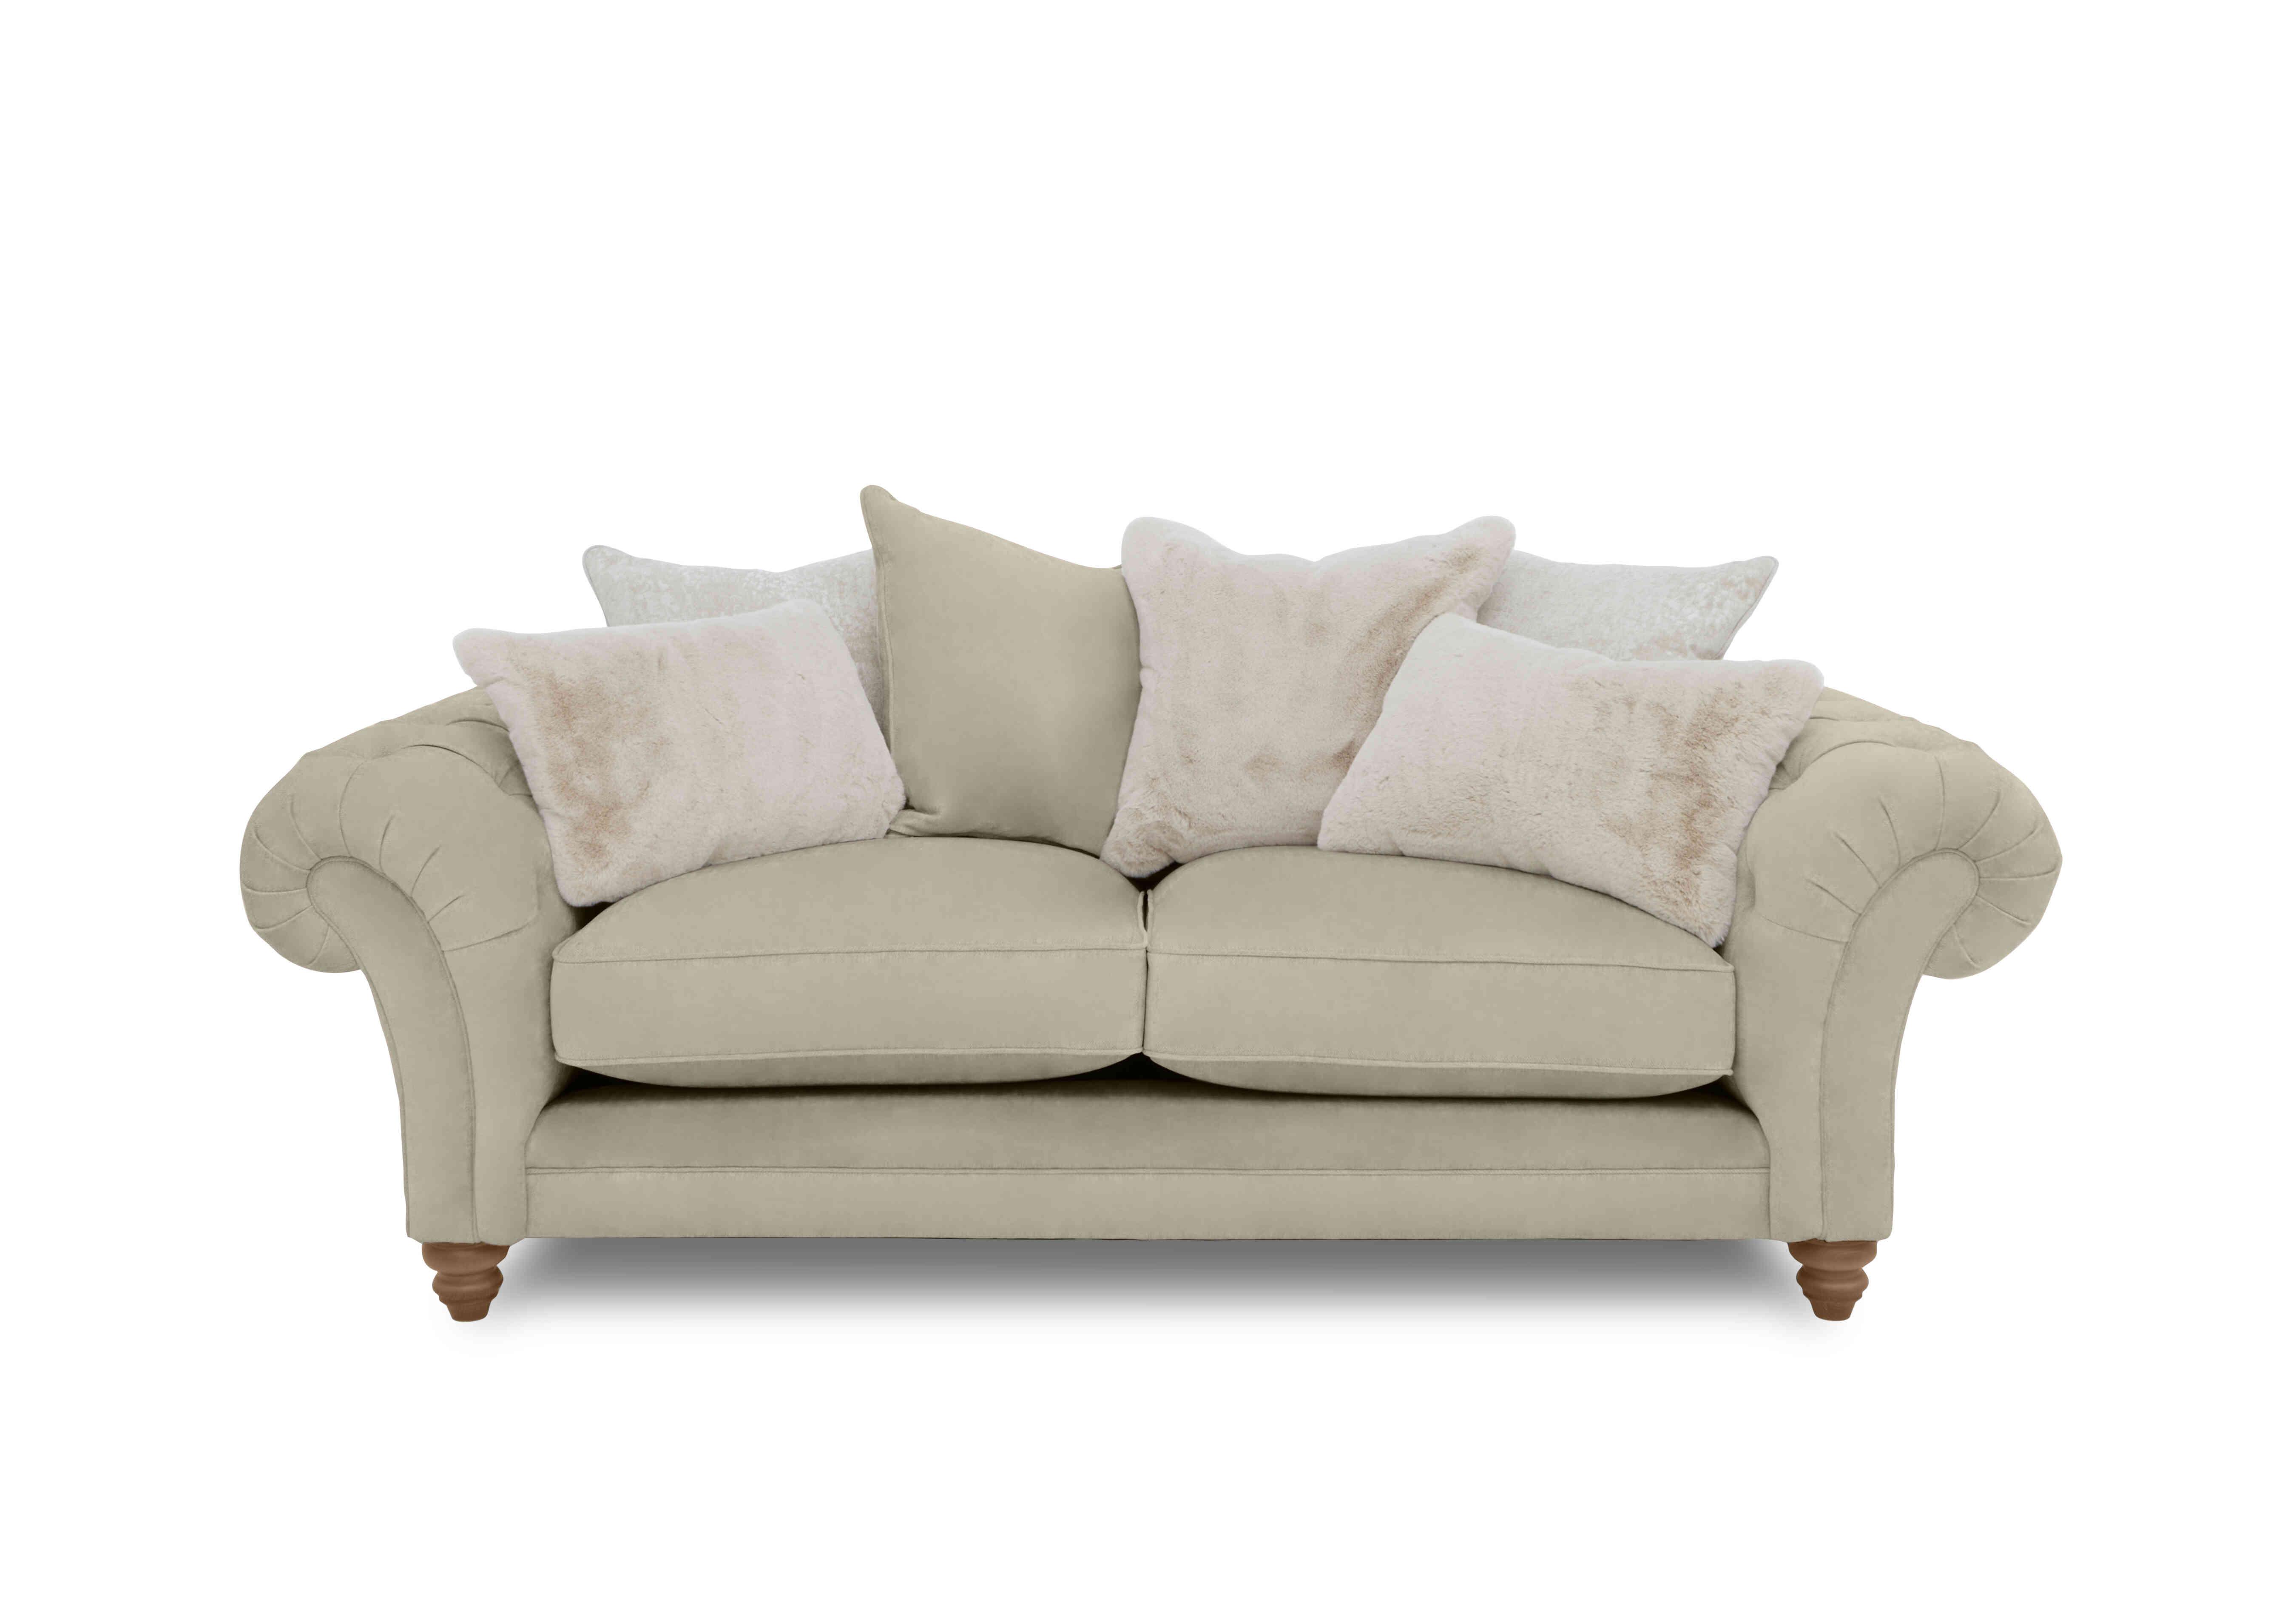 Blenheim 3 Seater Scatter Back Sofa in Marlborough Wicker Ivory Of on Furniture Village